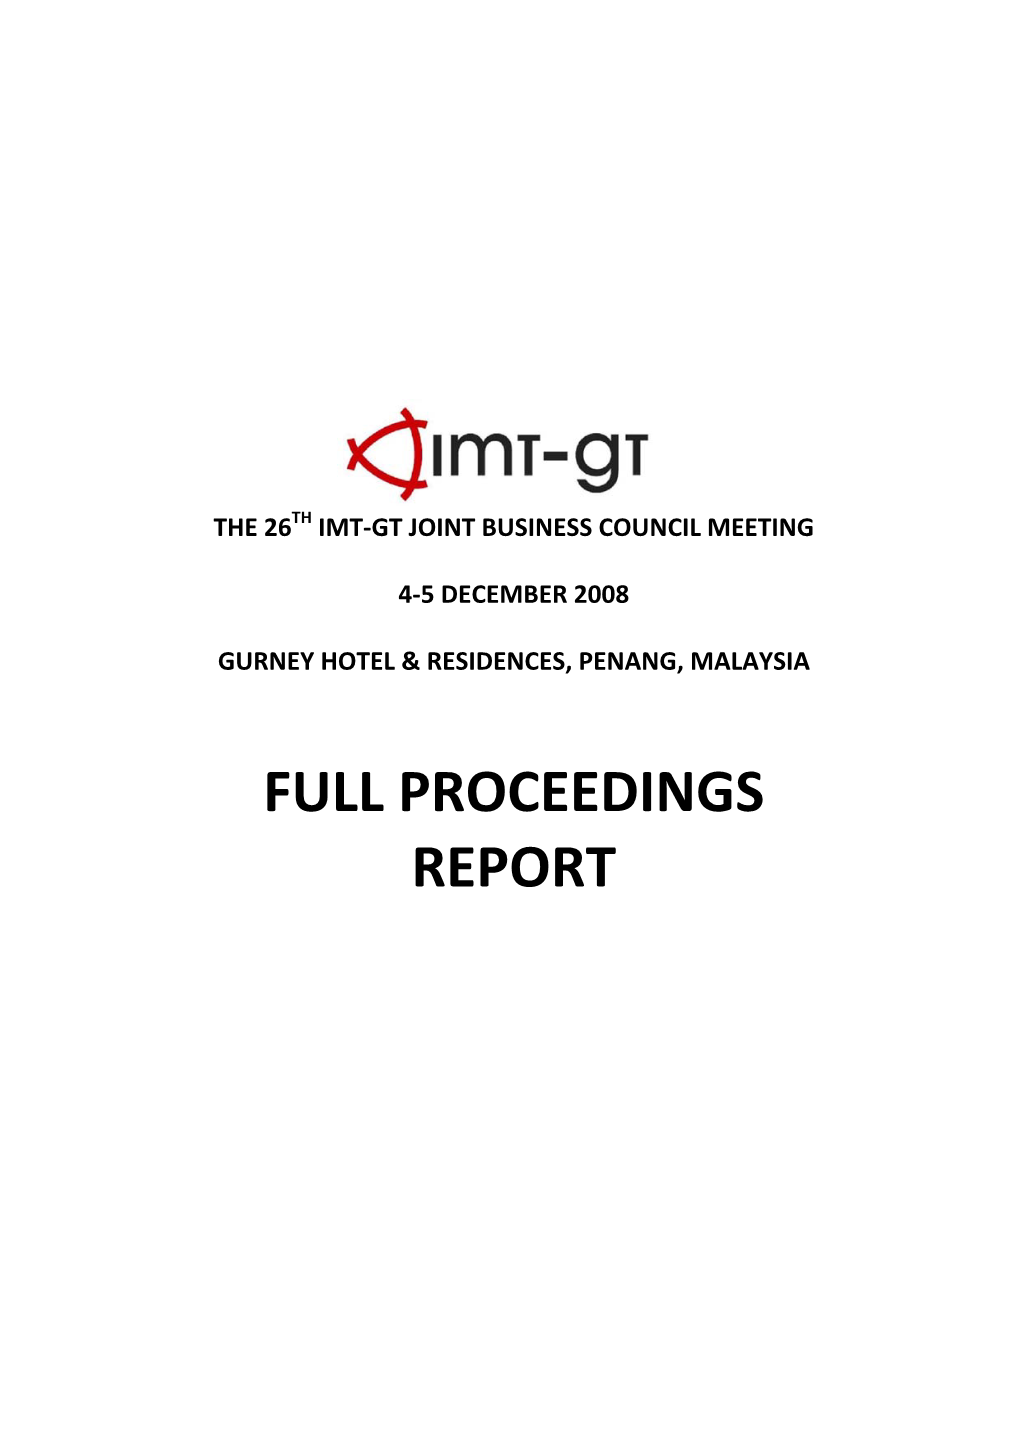 Full Proceedings Report